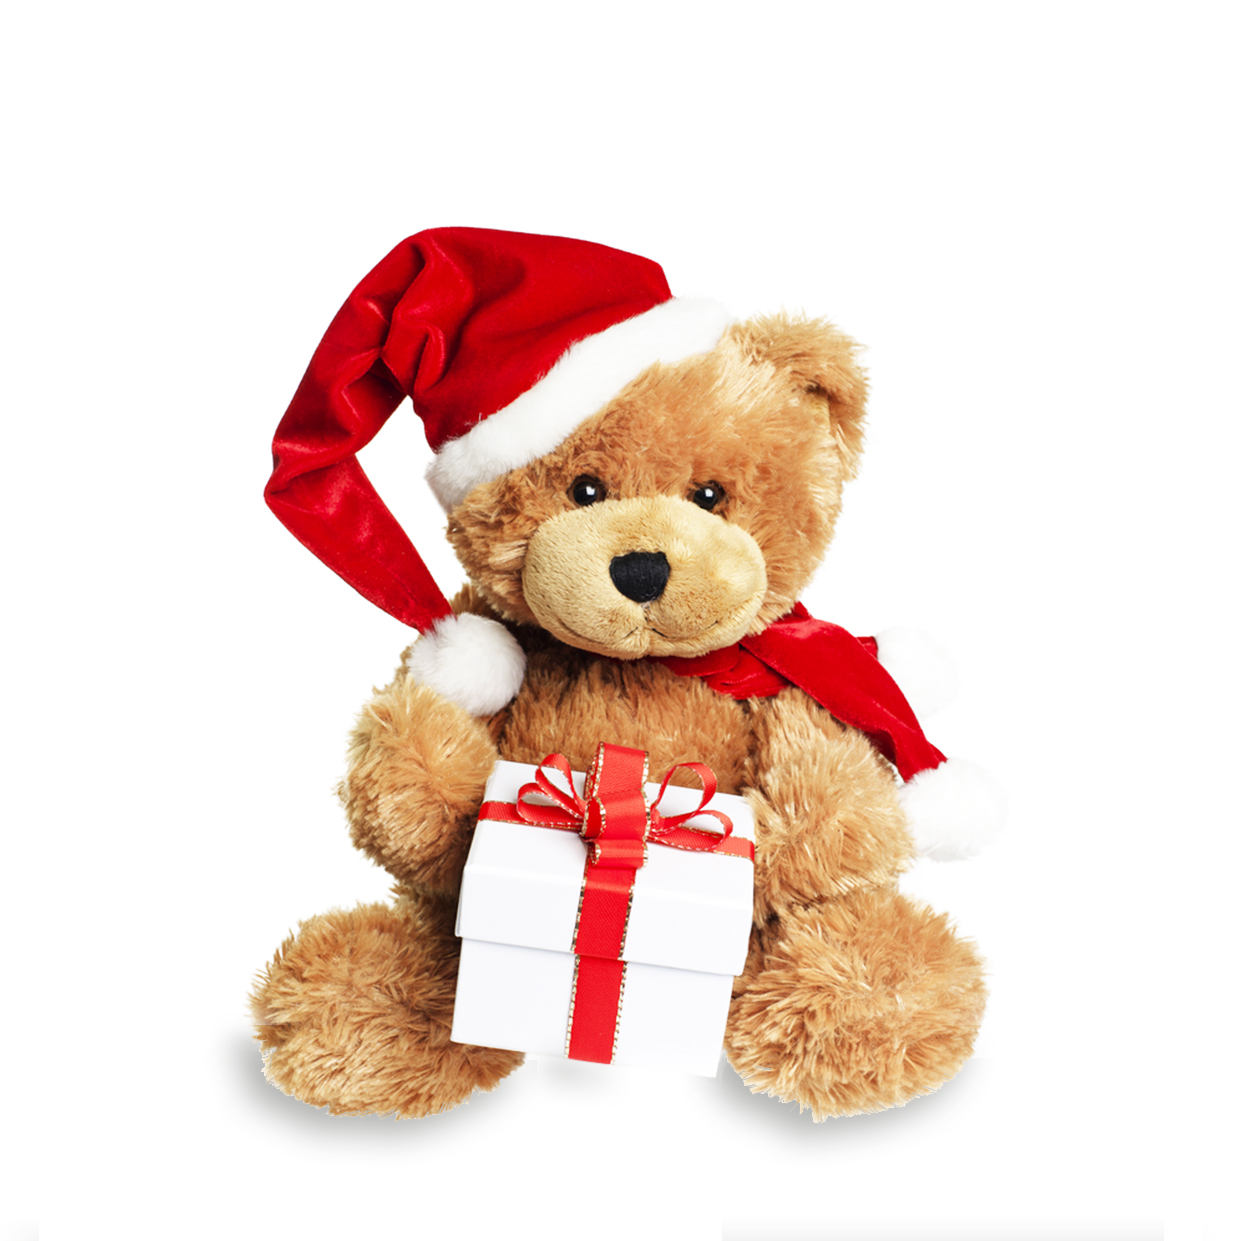 Christmas Teddy - sent on December 26th, 2021